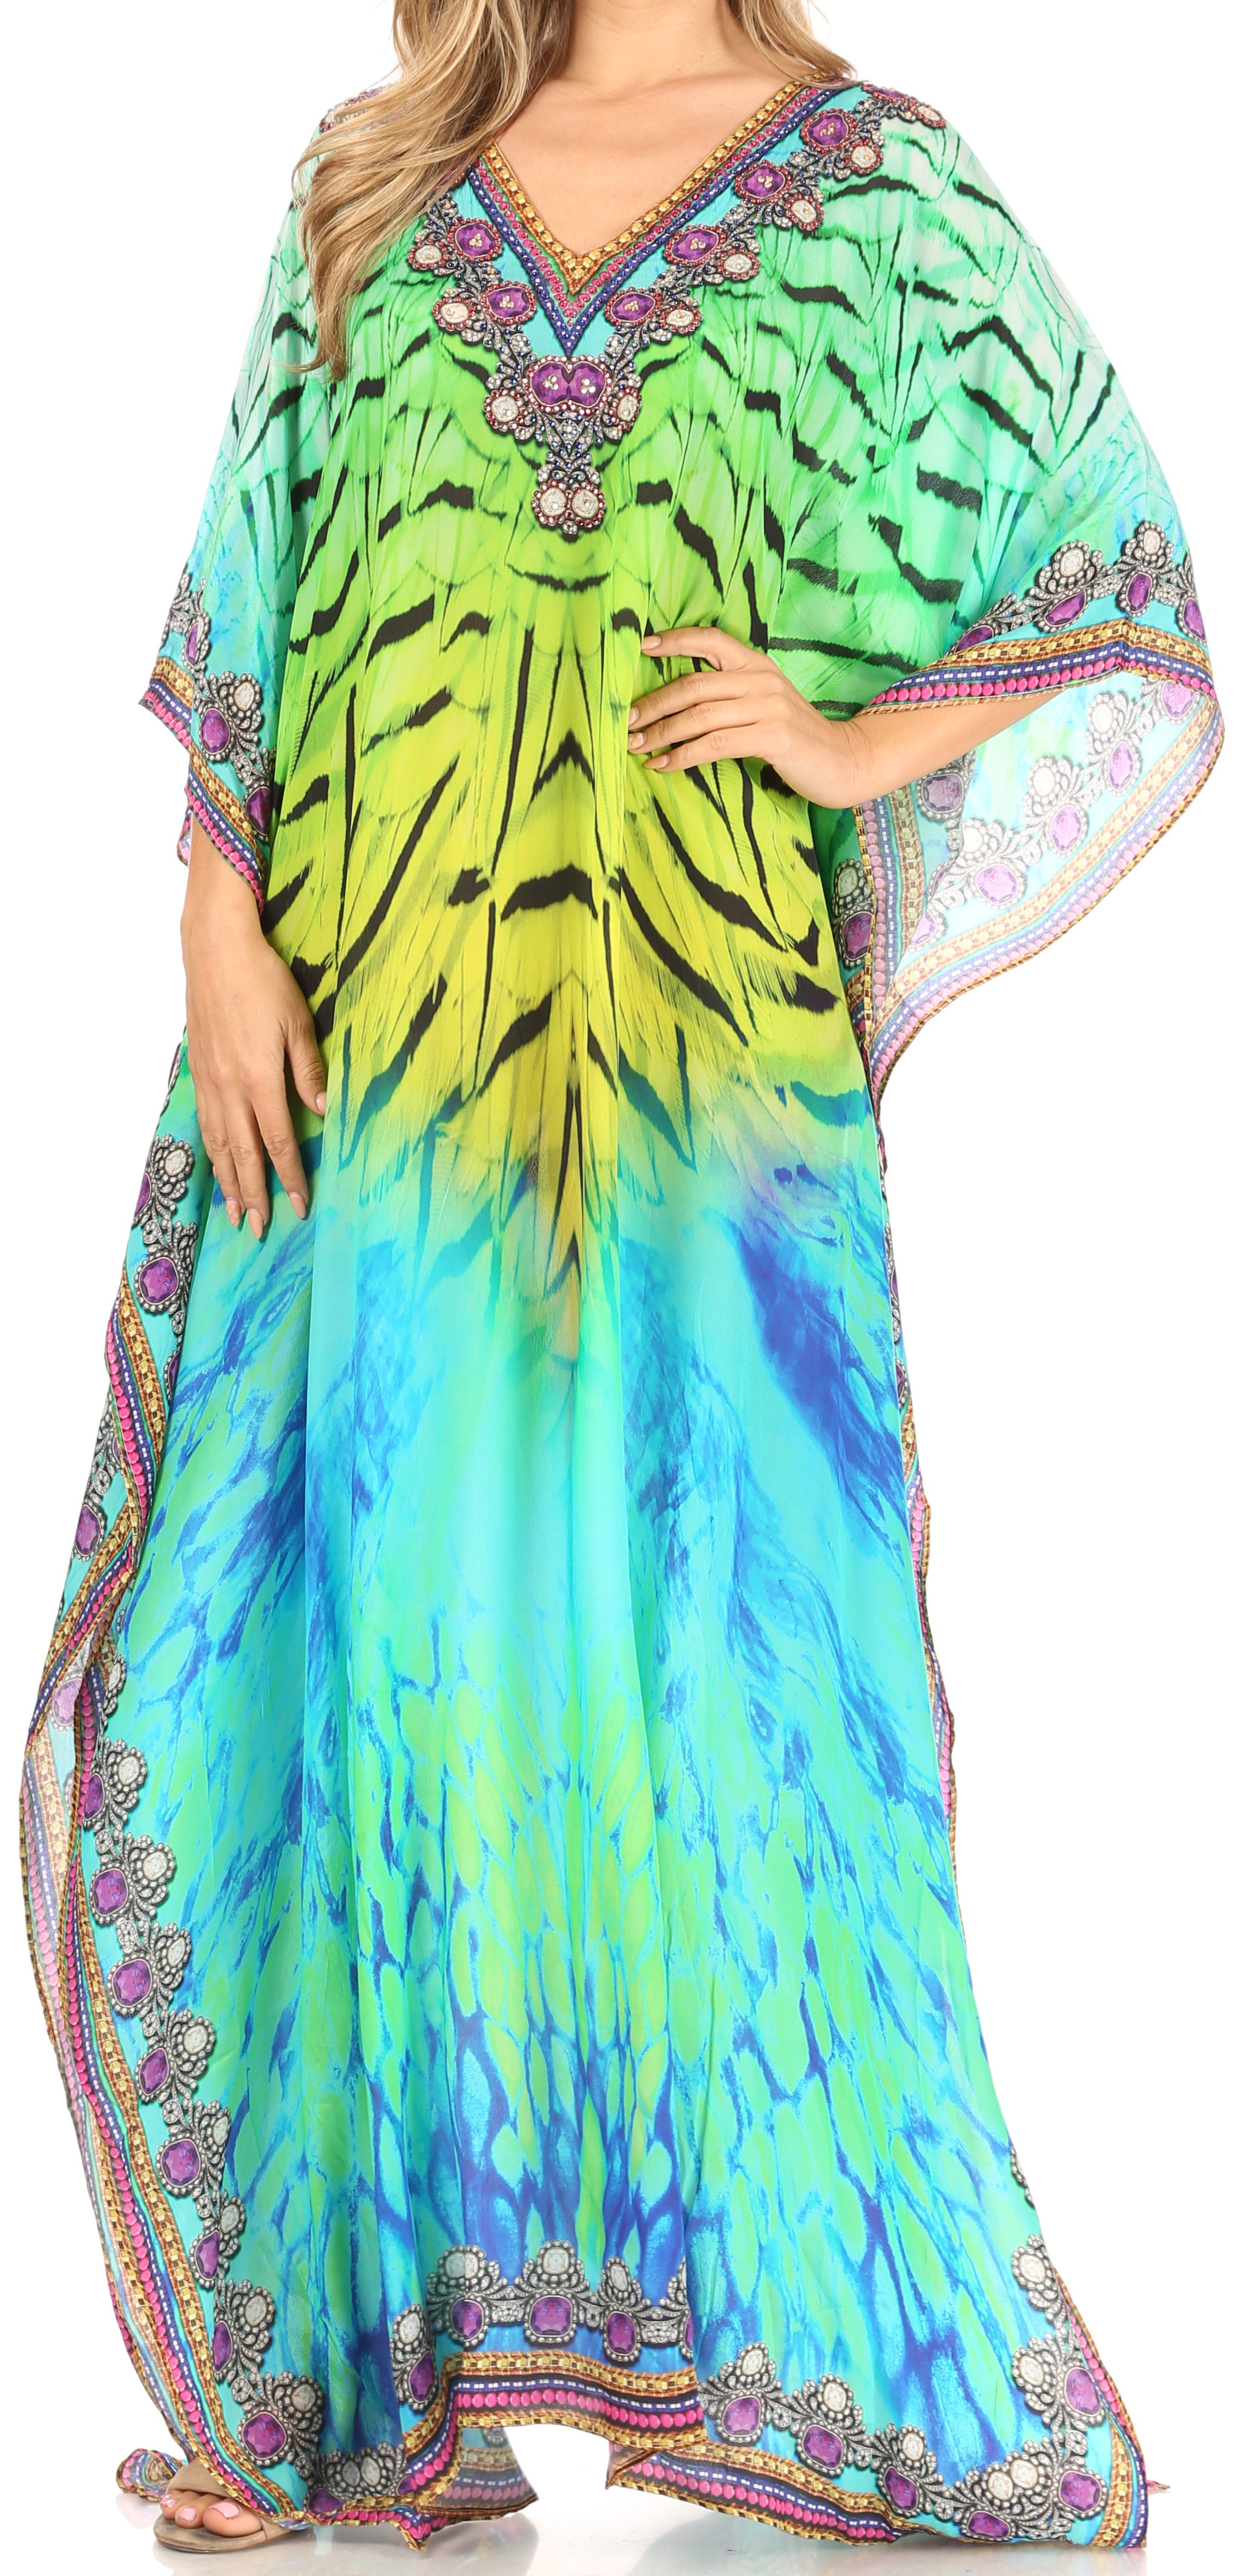 Sakkas Anahi Flowy Design V Neck Long Caftan Dress//Cover Up with Rhinestone